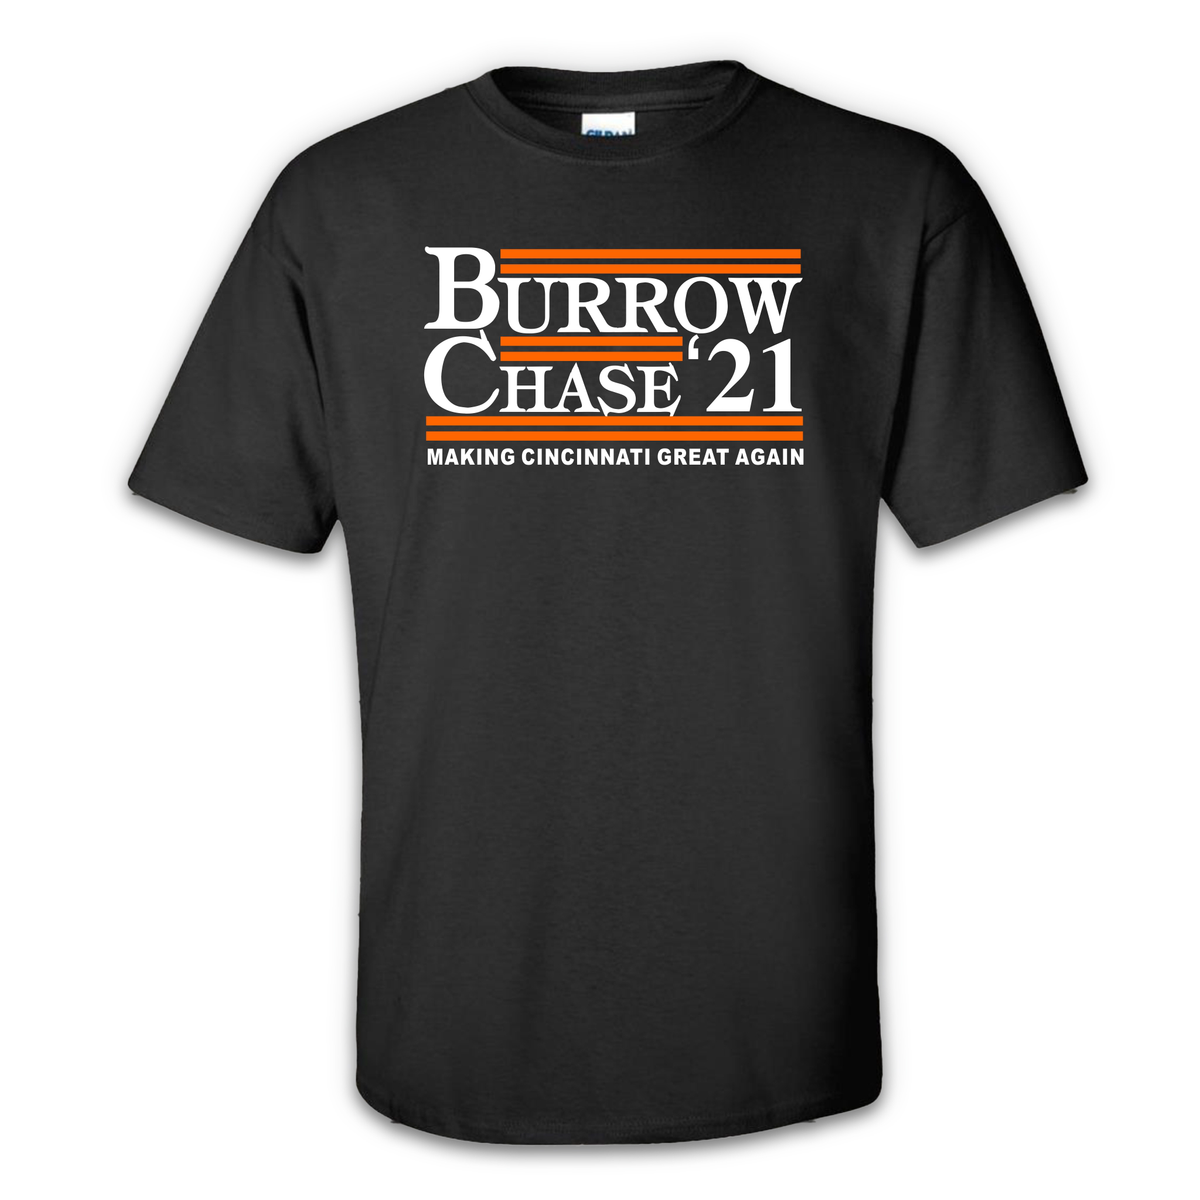 burrow chase 21